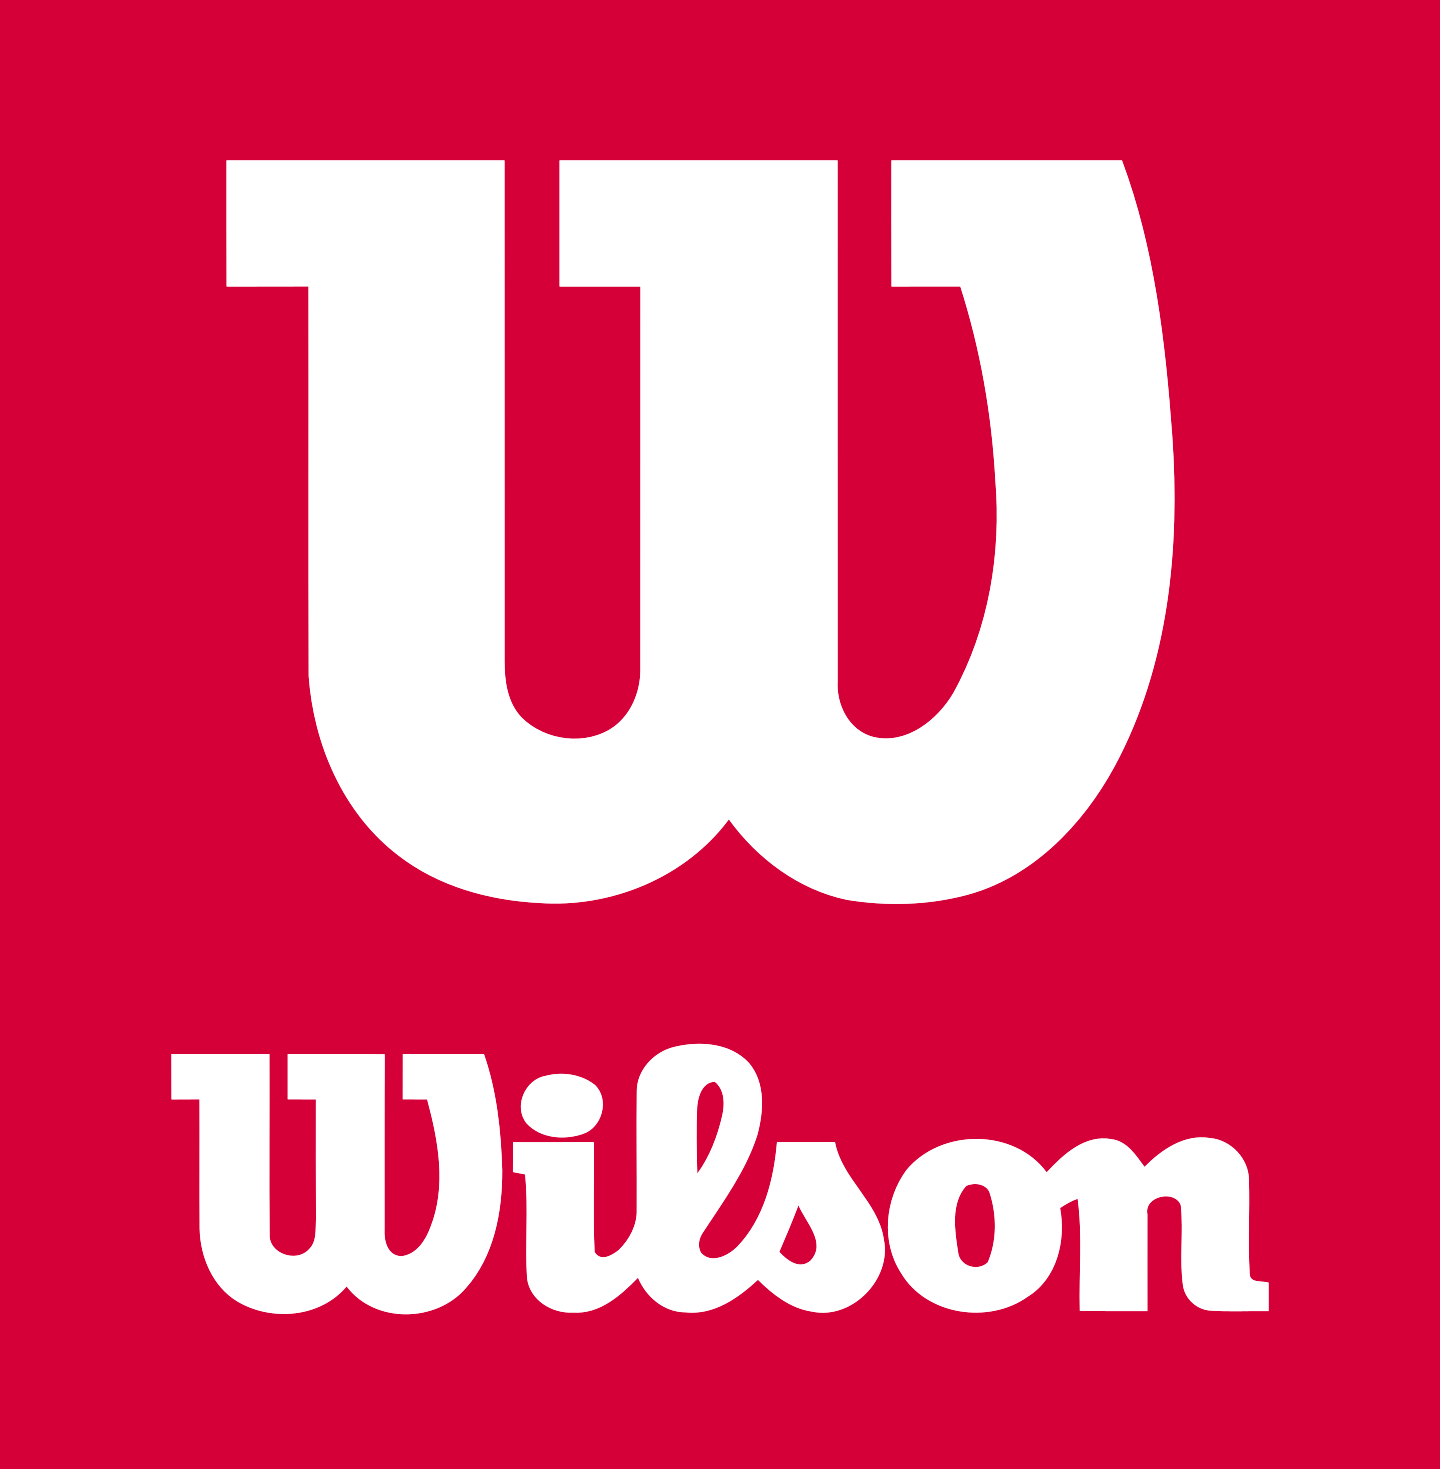 wilson logo 5 - Wilson Logo